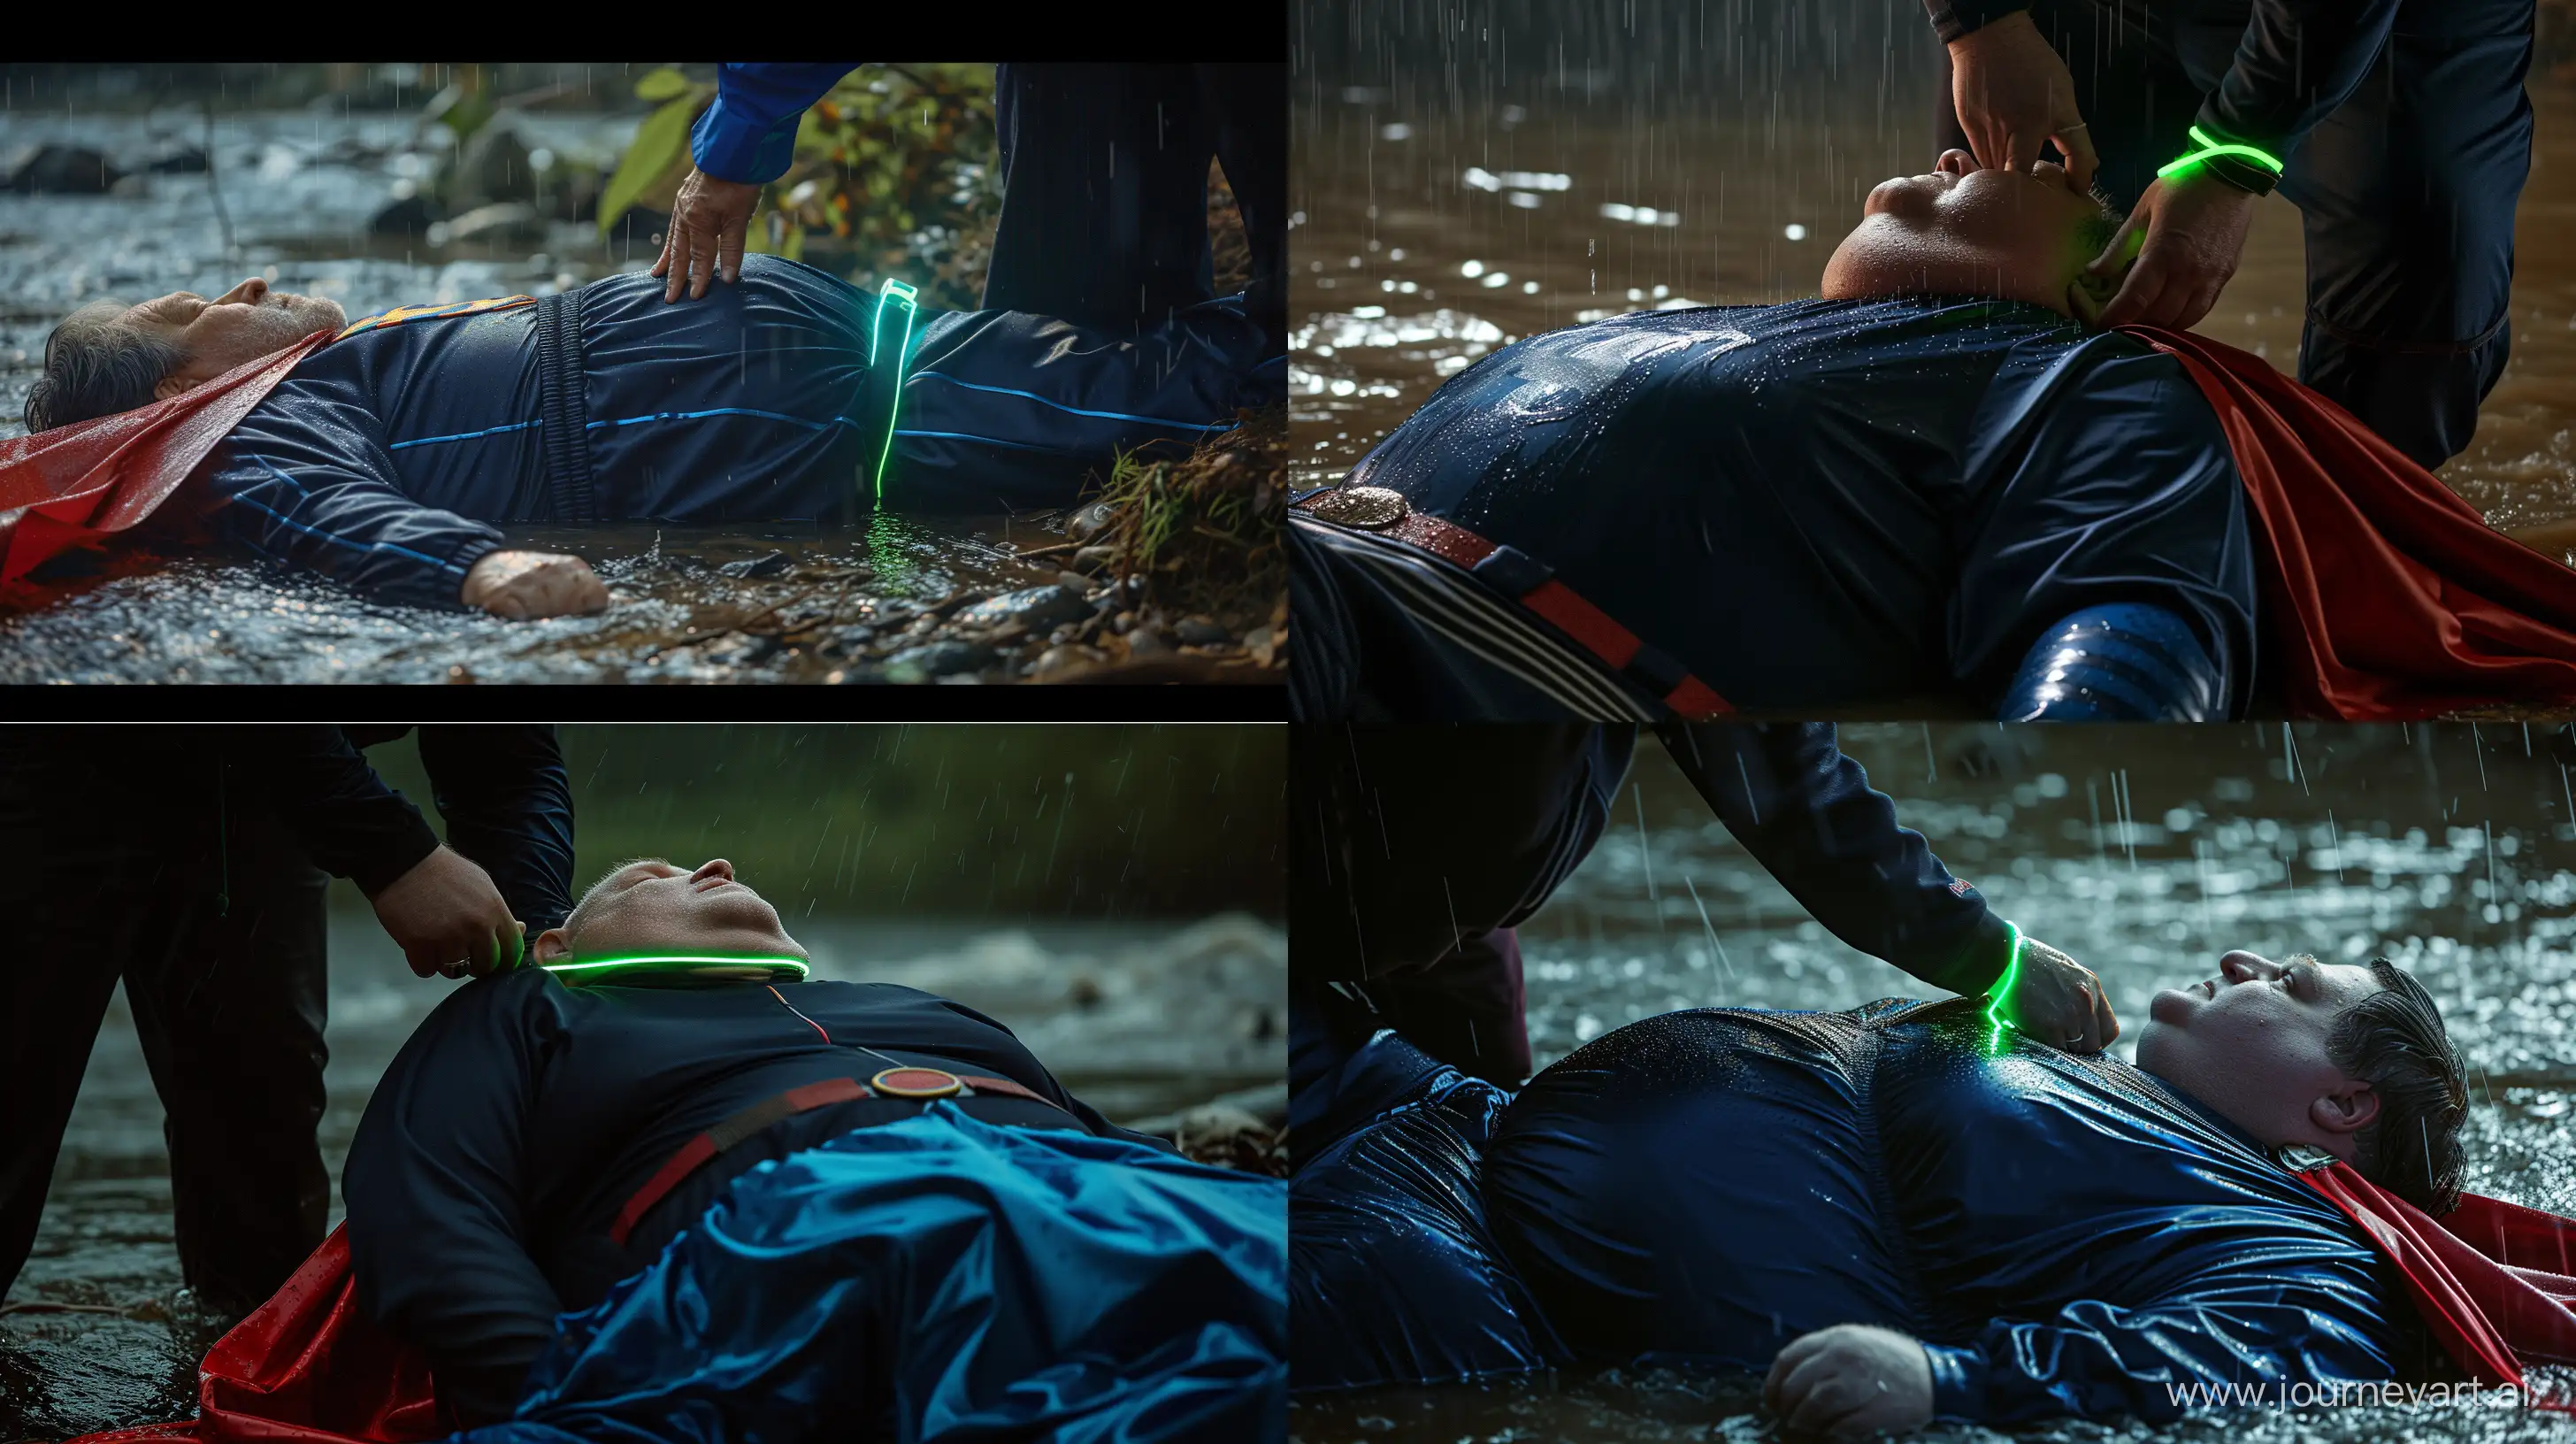 Eccentric-Scene-Neon-Dog-Collar-Tightening-on-Superman-in-the-Rain